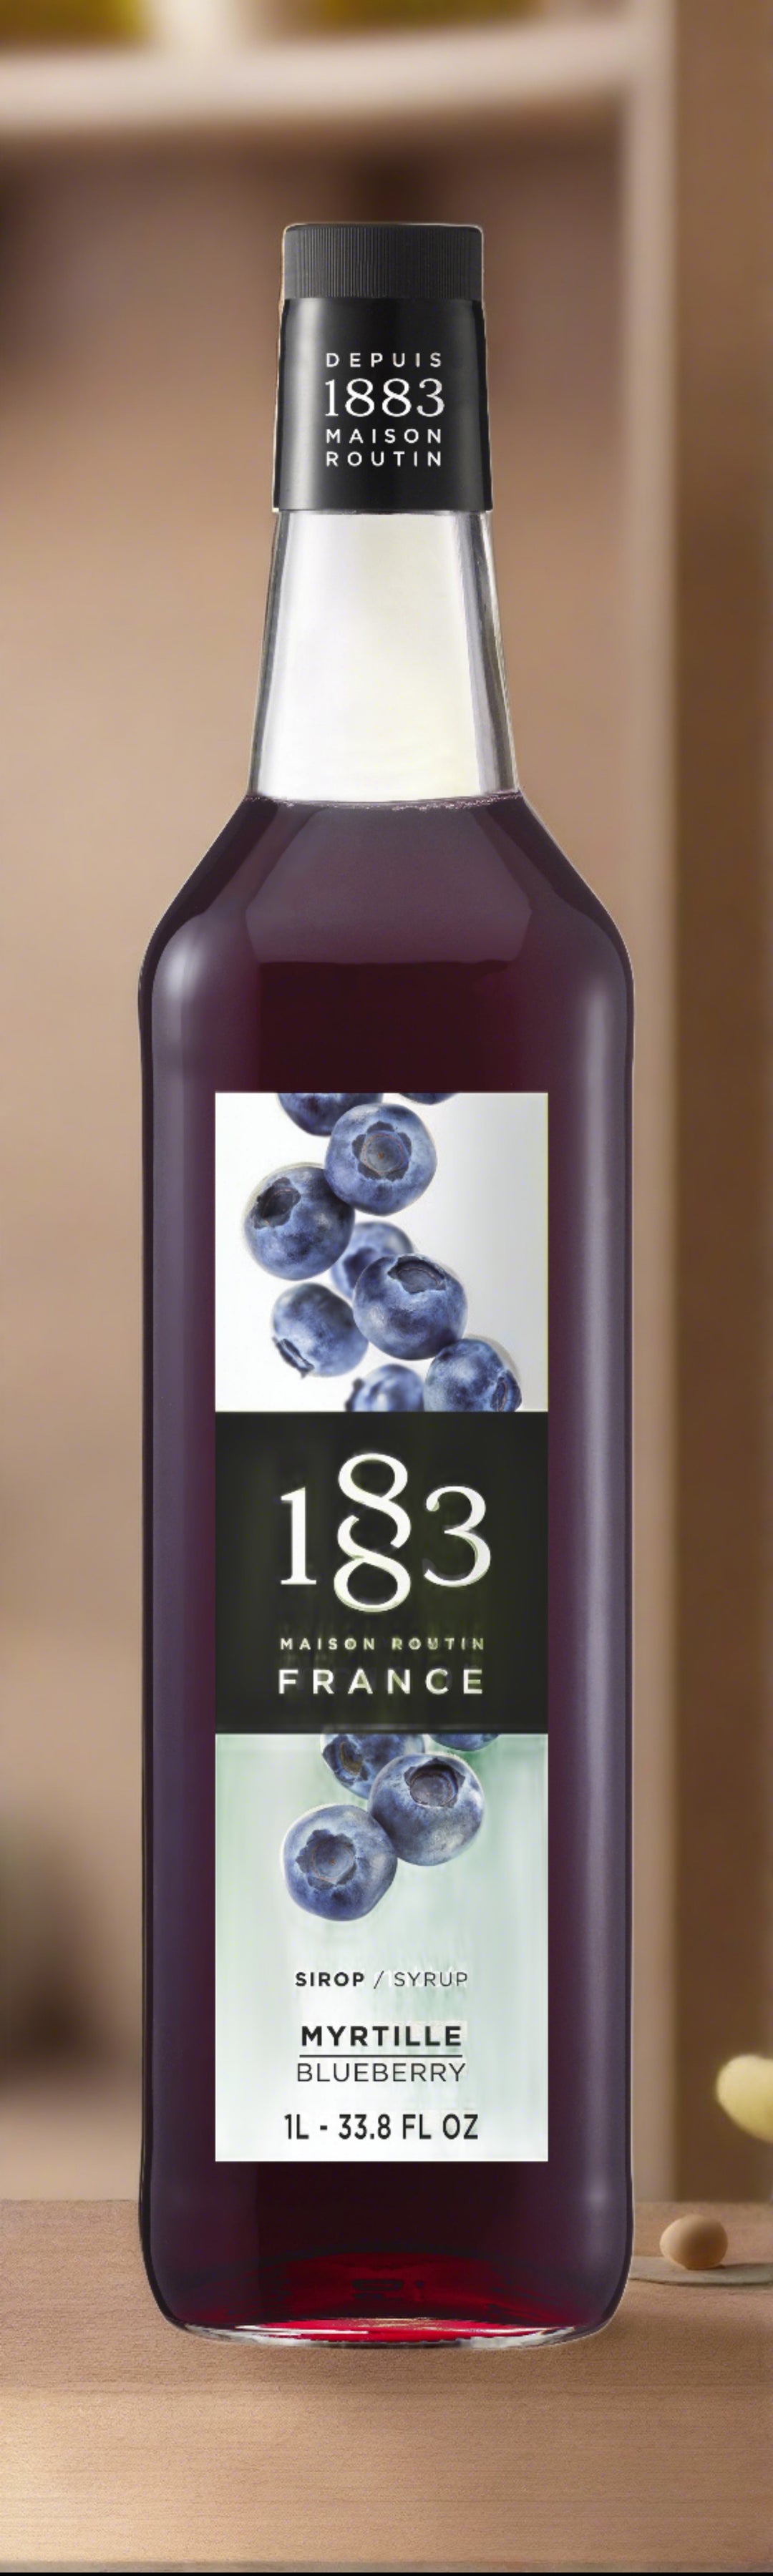 Blueberry 1L Syrup - 1883